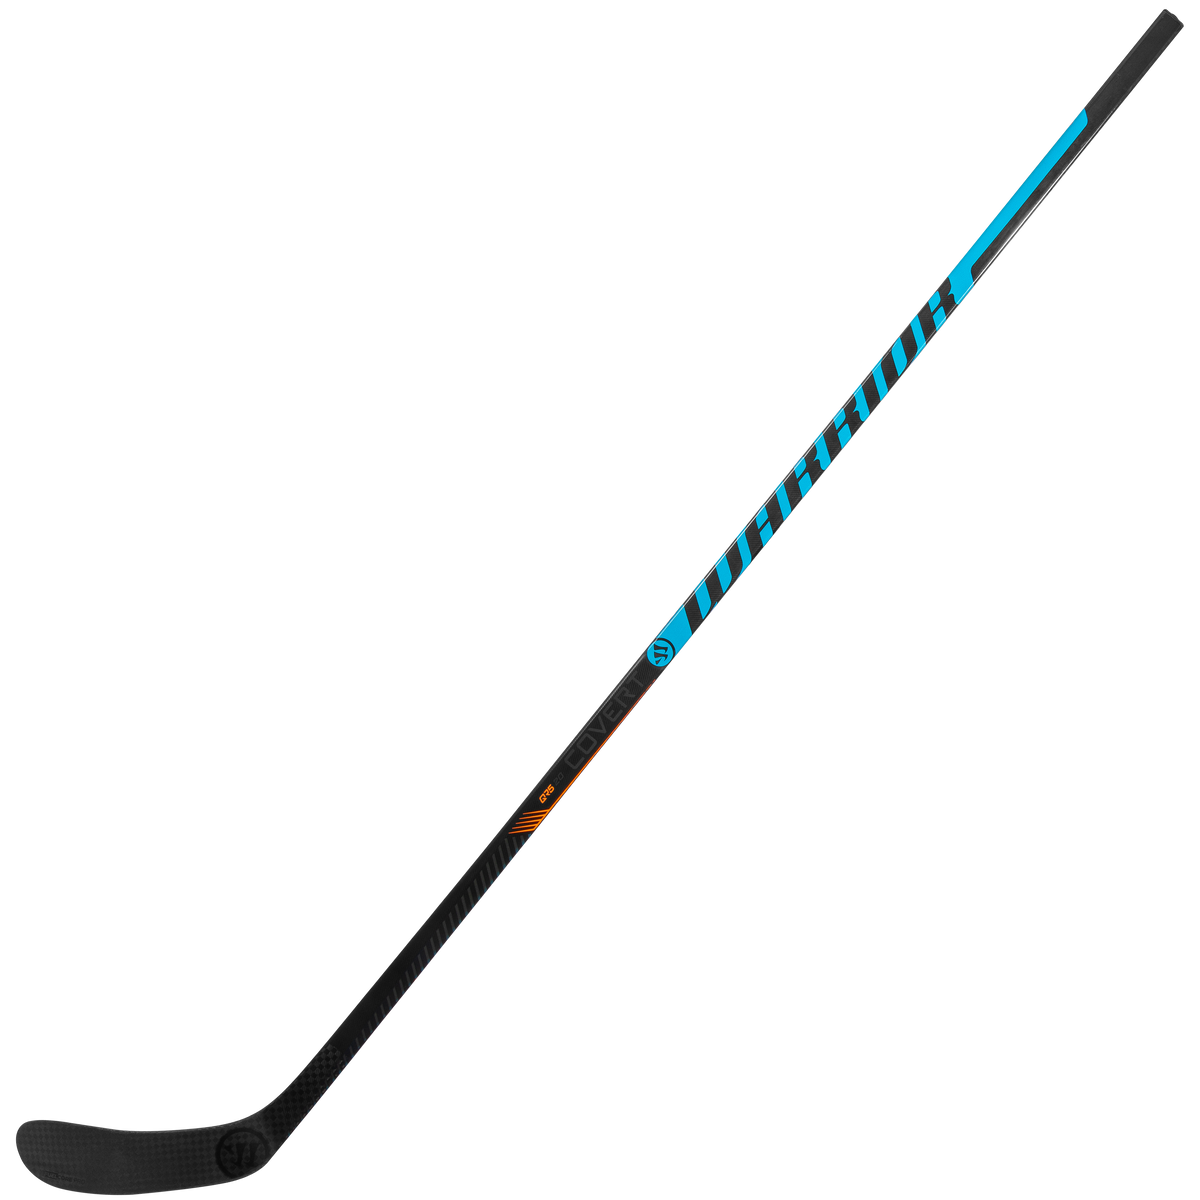 Warrior Covert QR5 20 Junior Hockey Stick